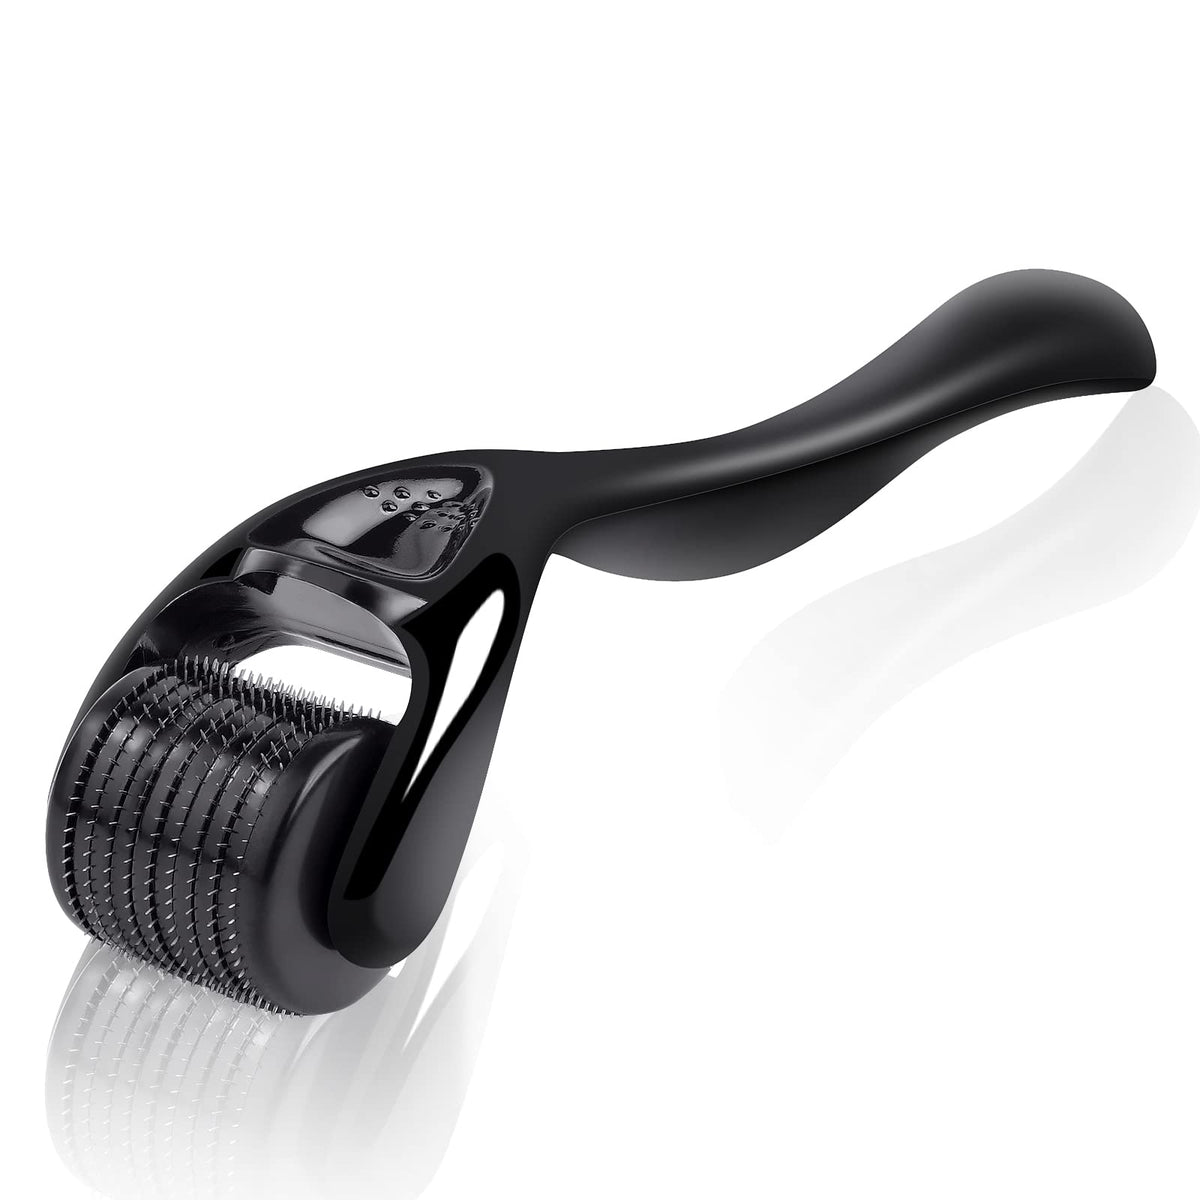 URAQT Derma Roller, 0.5mm Beard Roller, Titanium Micro Needling Roller for Men and Women, Beard Growth Roller for Stimulate Hair Growth, Facial Skin Care, Scar Removal